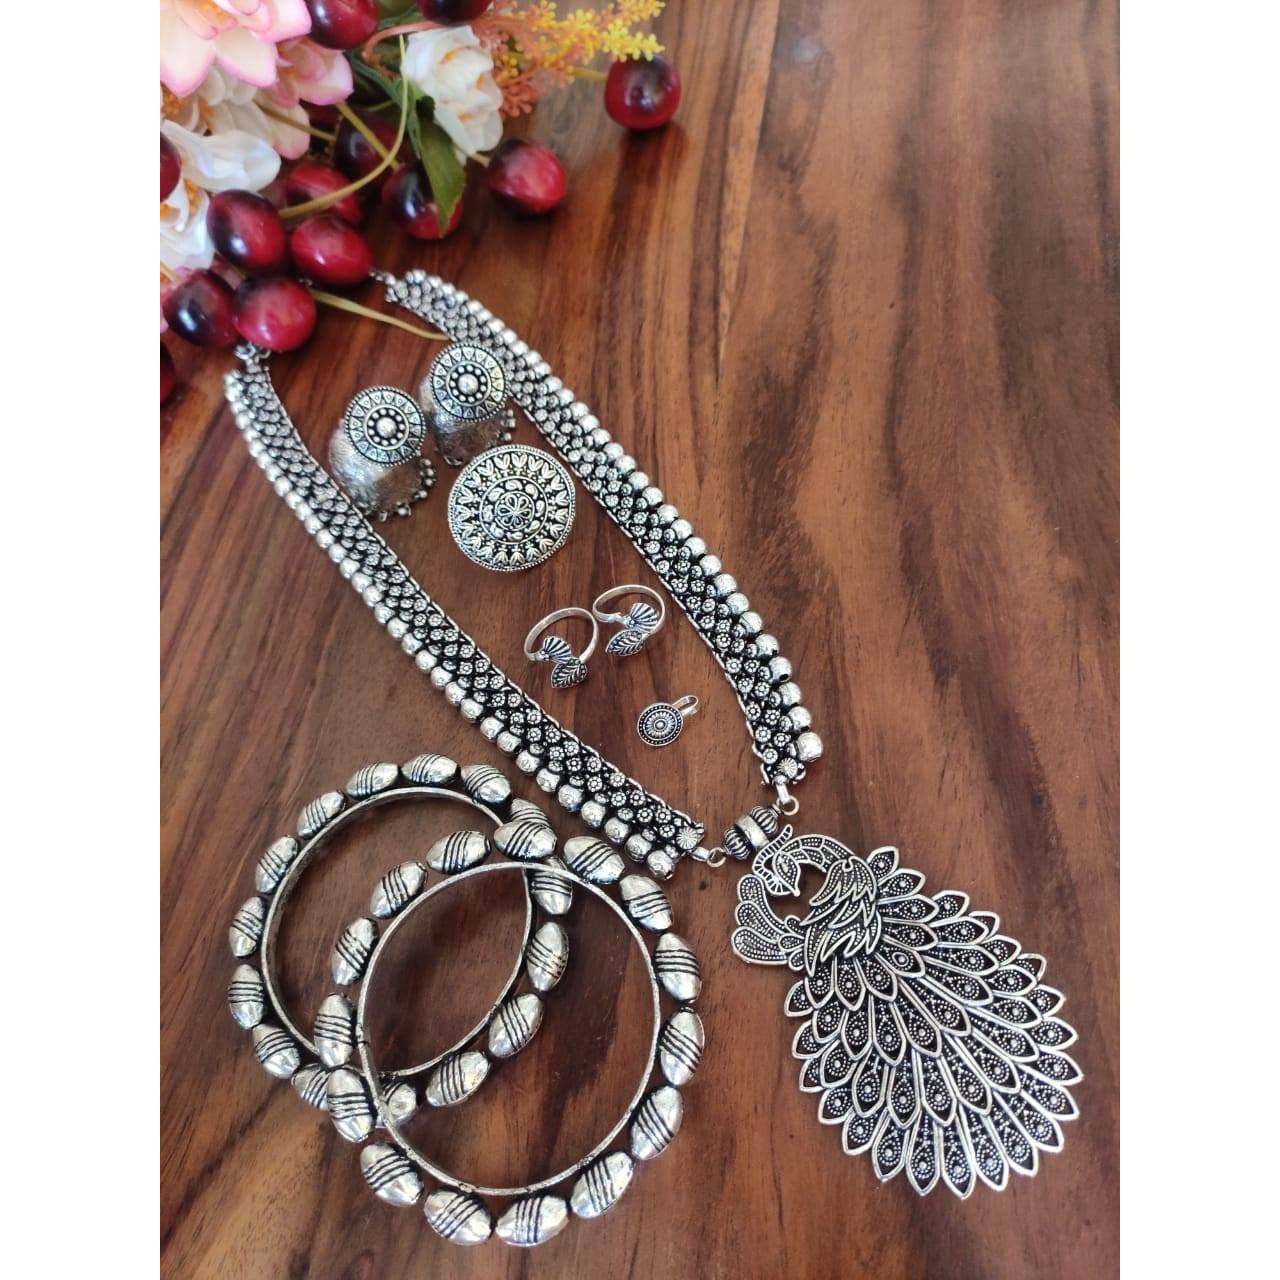 Indian Traditional German Silver Oxidized Jewelry Set of 6 | Boho Tribal Necklace Handmade Oxidized Silver Black Jewelry Set